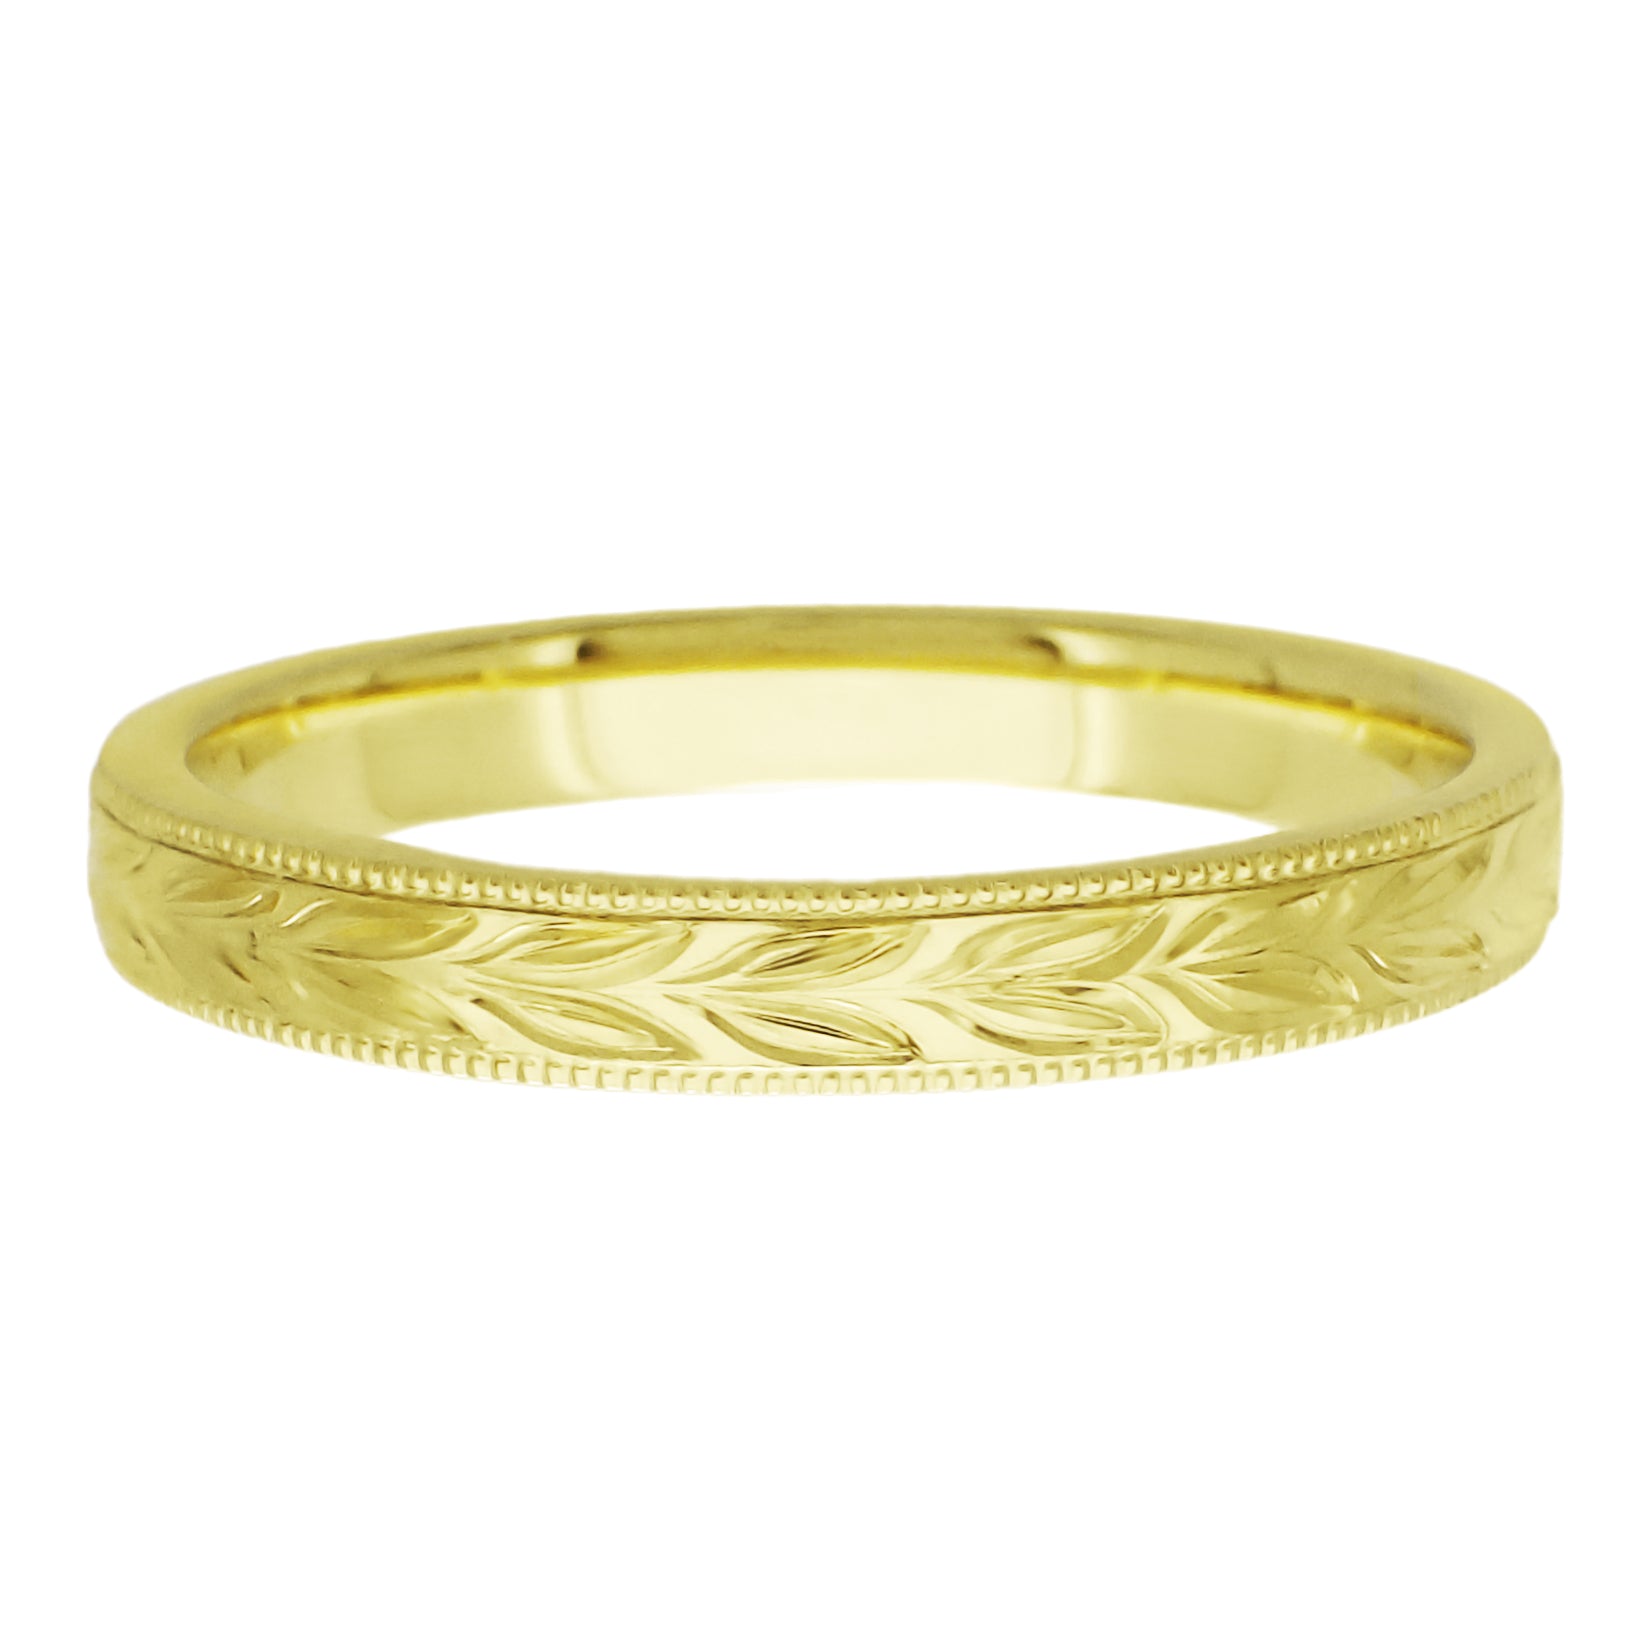 Gold wedding Ring Set of Traditional Hawaiian Hand Engraved 14k